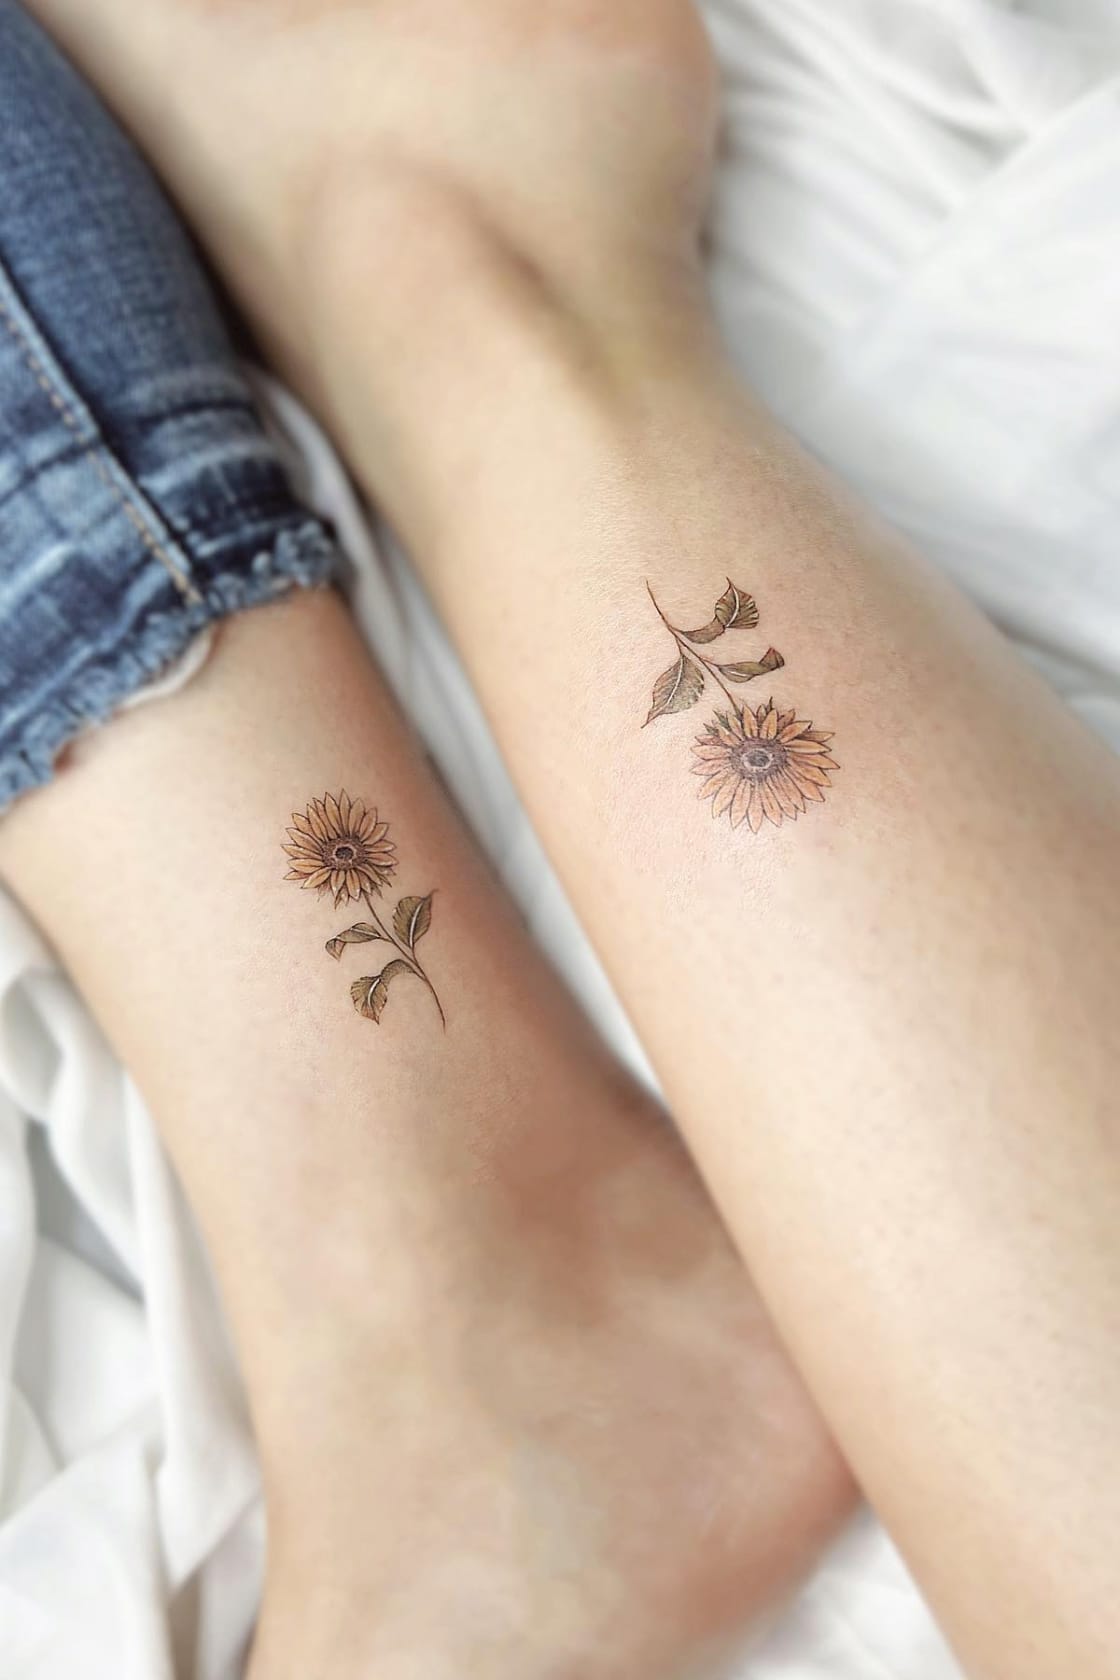 Small sunflower matching tattoo